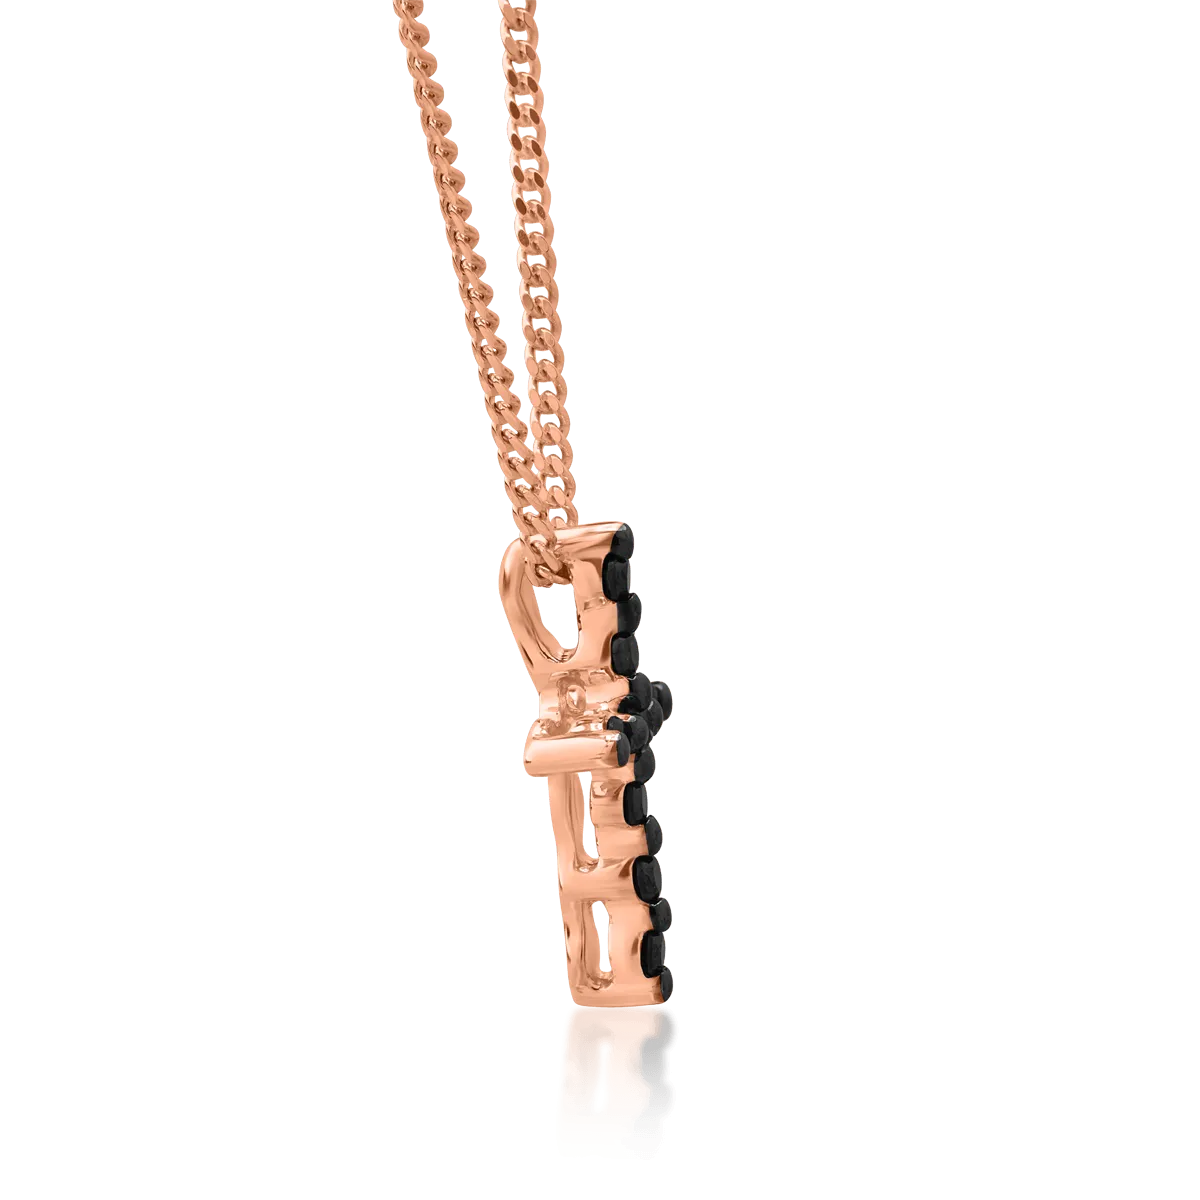 18K rose gold cross pendant necklace with 0.06ct black diamonds